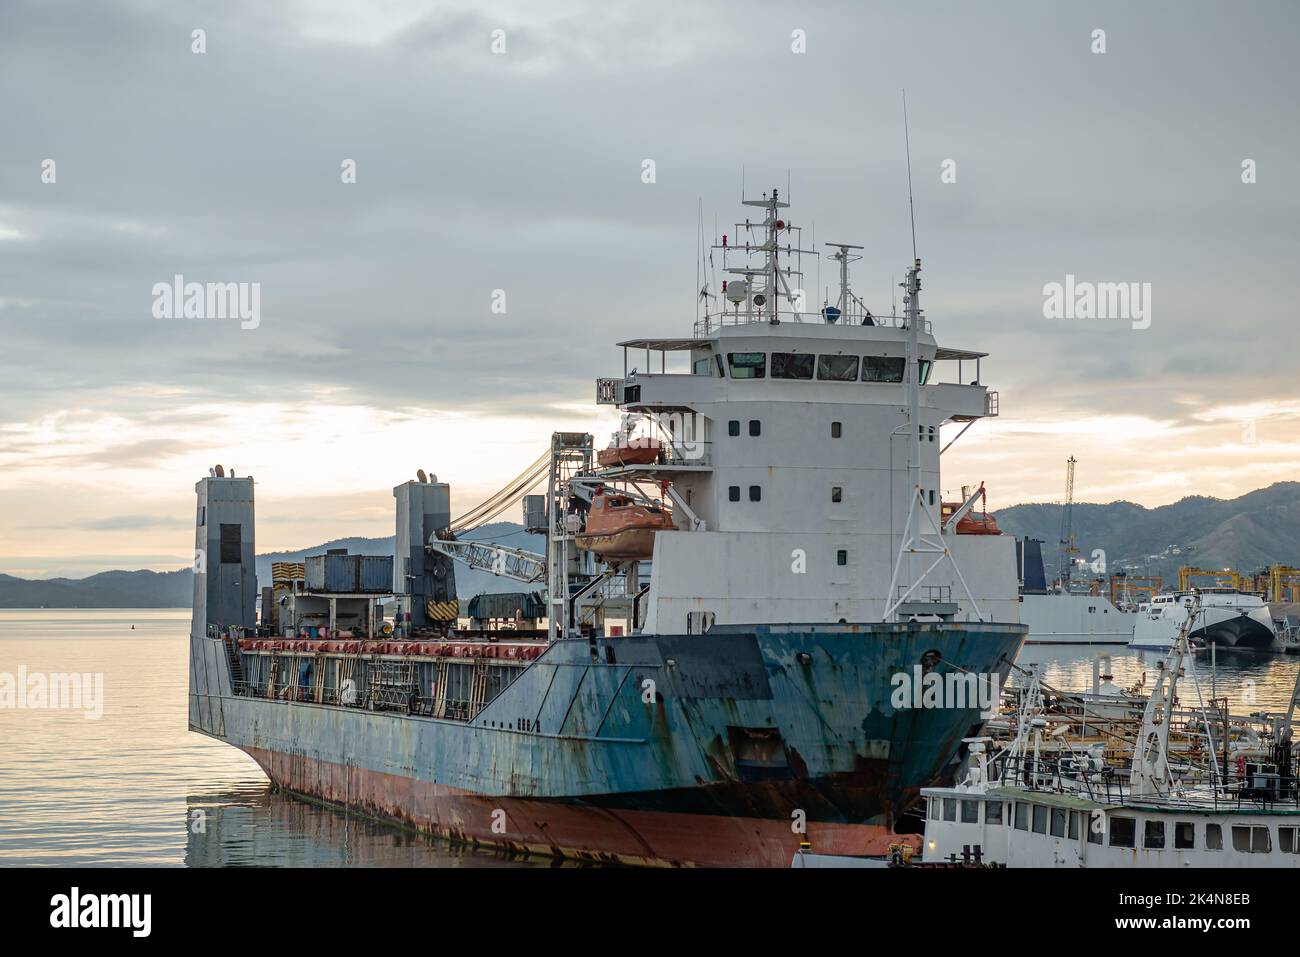 Ship vessel water docked industrial transportation port freight sea cargo vessel harbor Stock Photo